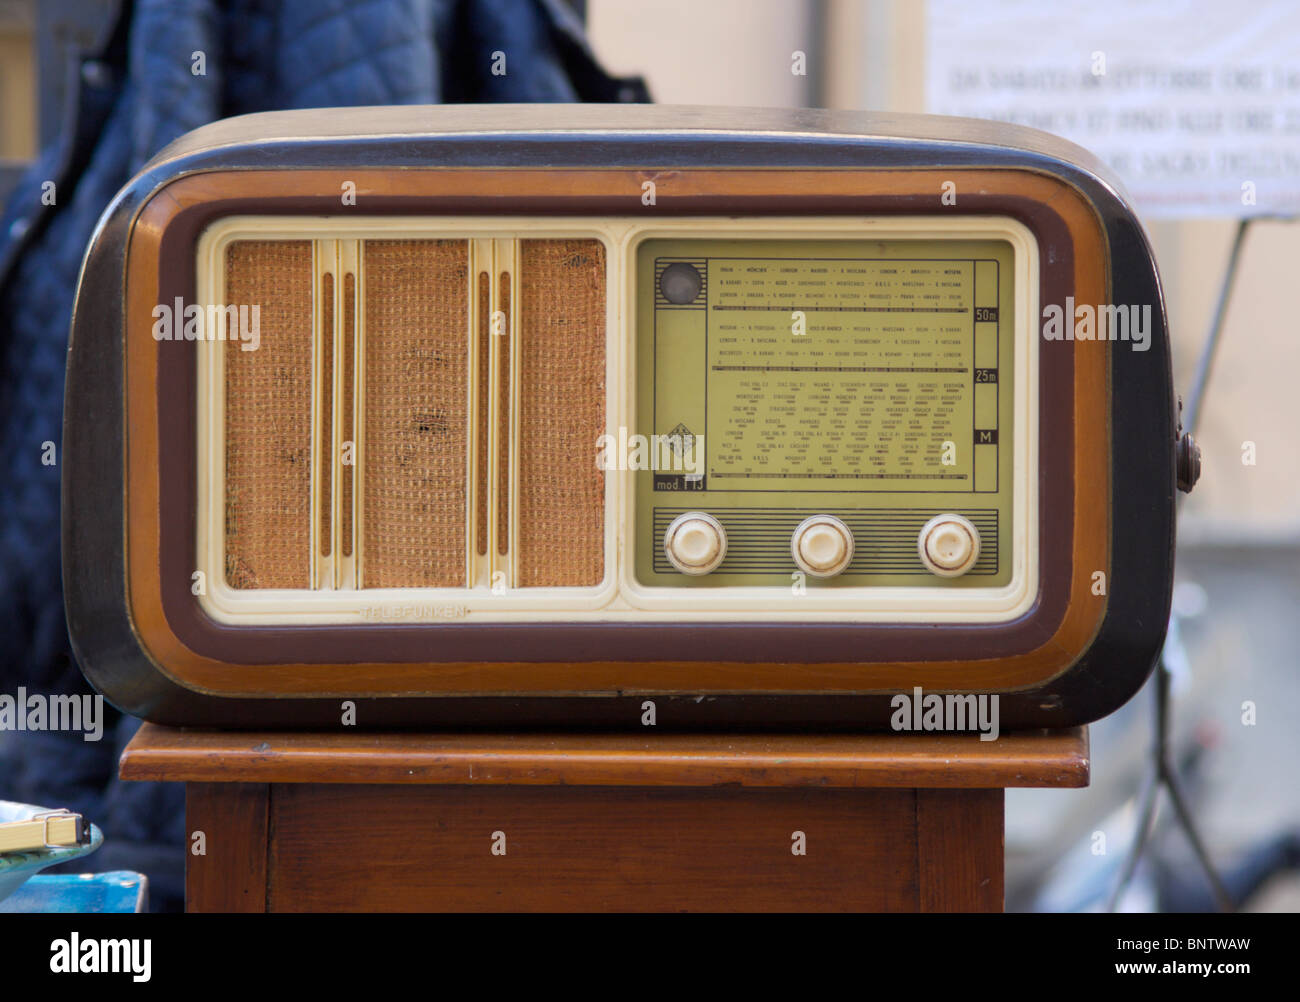 Vintage Telefunken radio Foto stock - Alamy